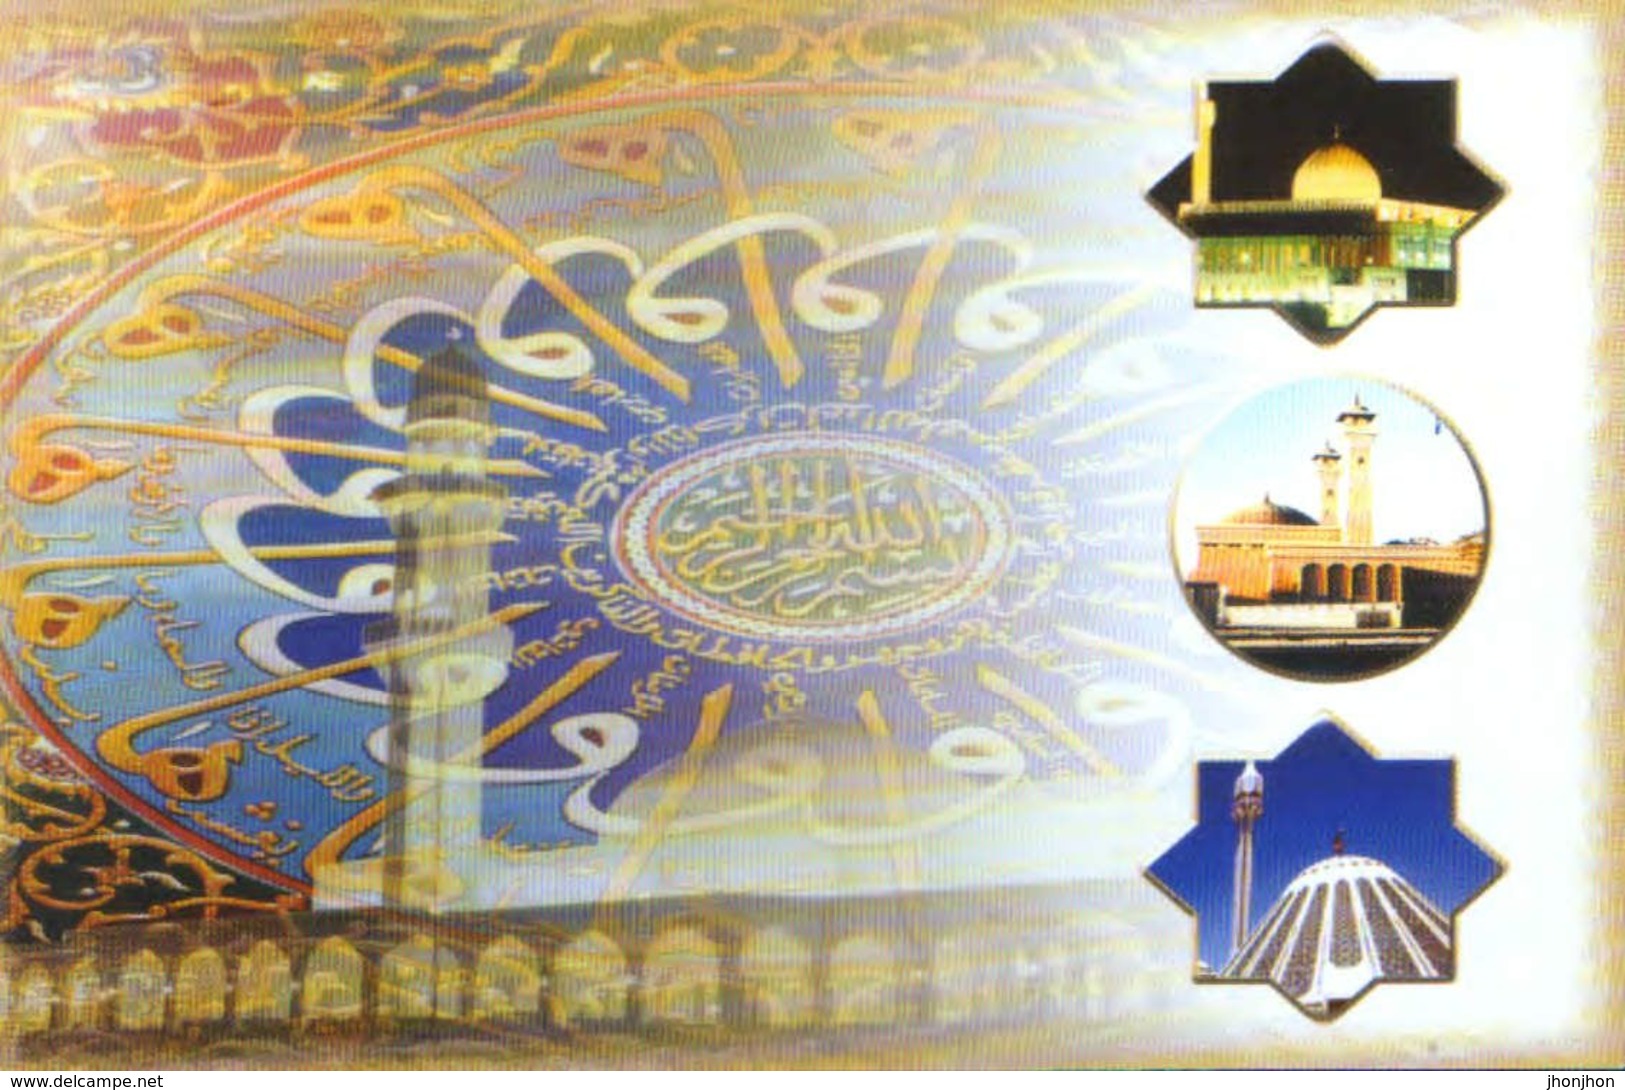 Kuwait - Postcard Unused - Kuwait City - Mosques - 2/scans - Koweït